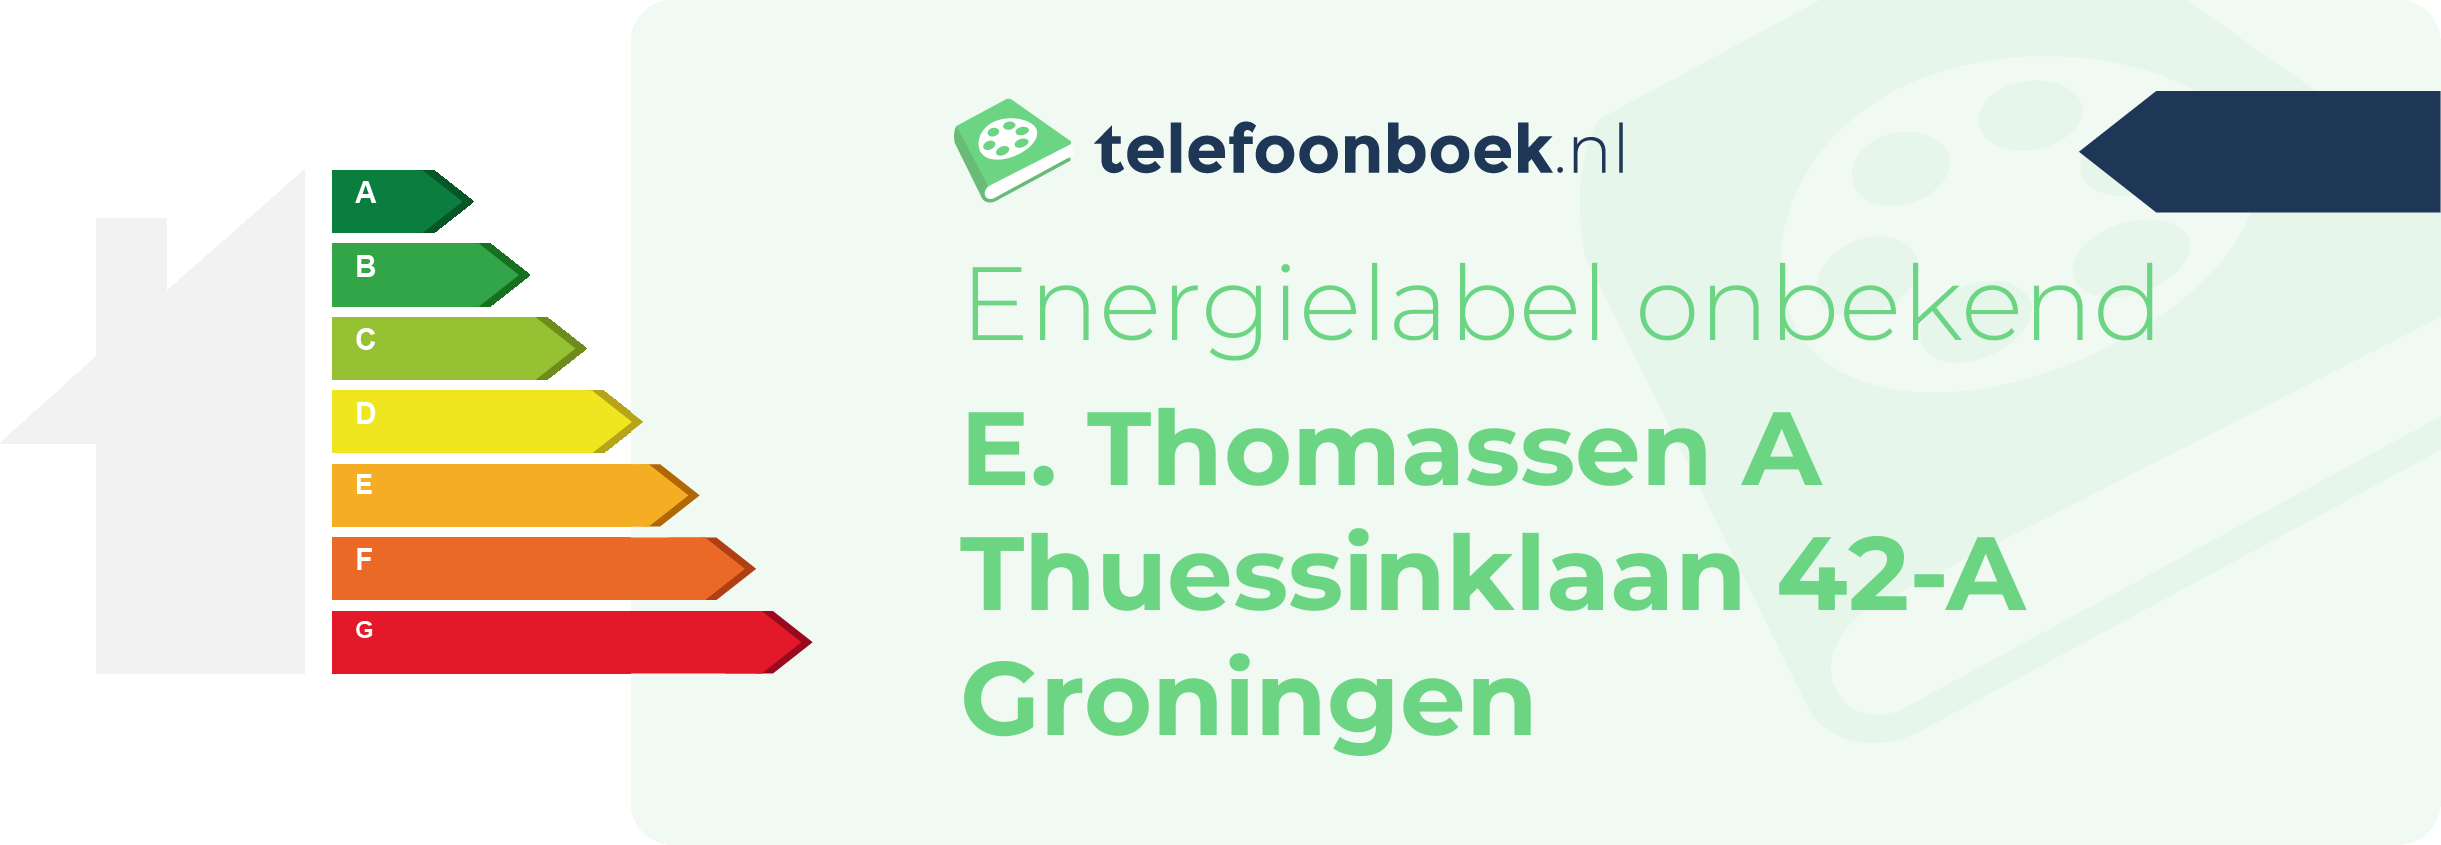 Energielabel E. Thomassen A Thuessinklaan 42-A Groningen